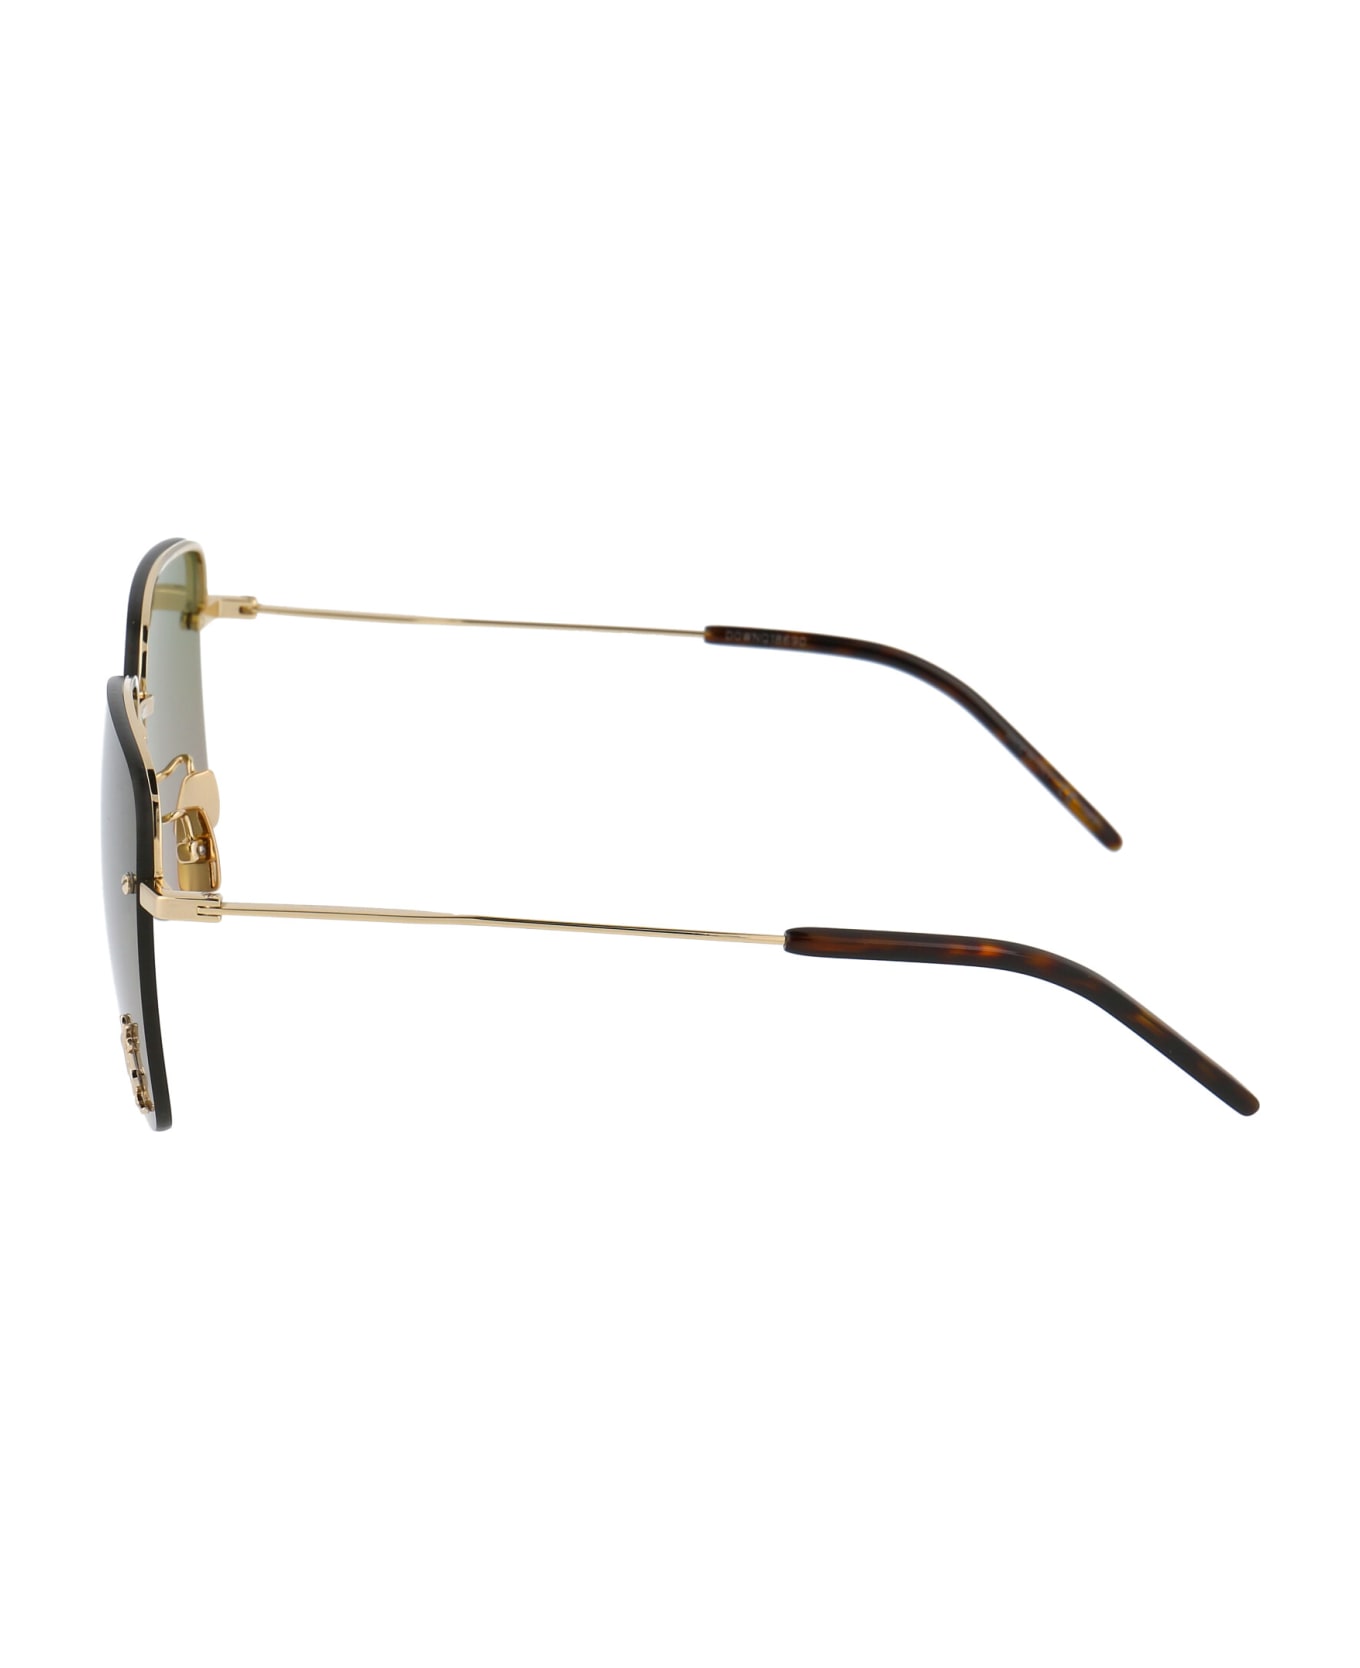 Saint Laurent Eyewear Sl 312 M Sunglasses - 003 GOLD GOLD GREEN サングラス